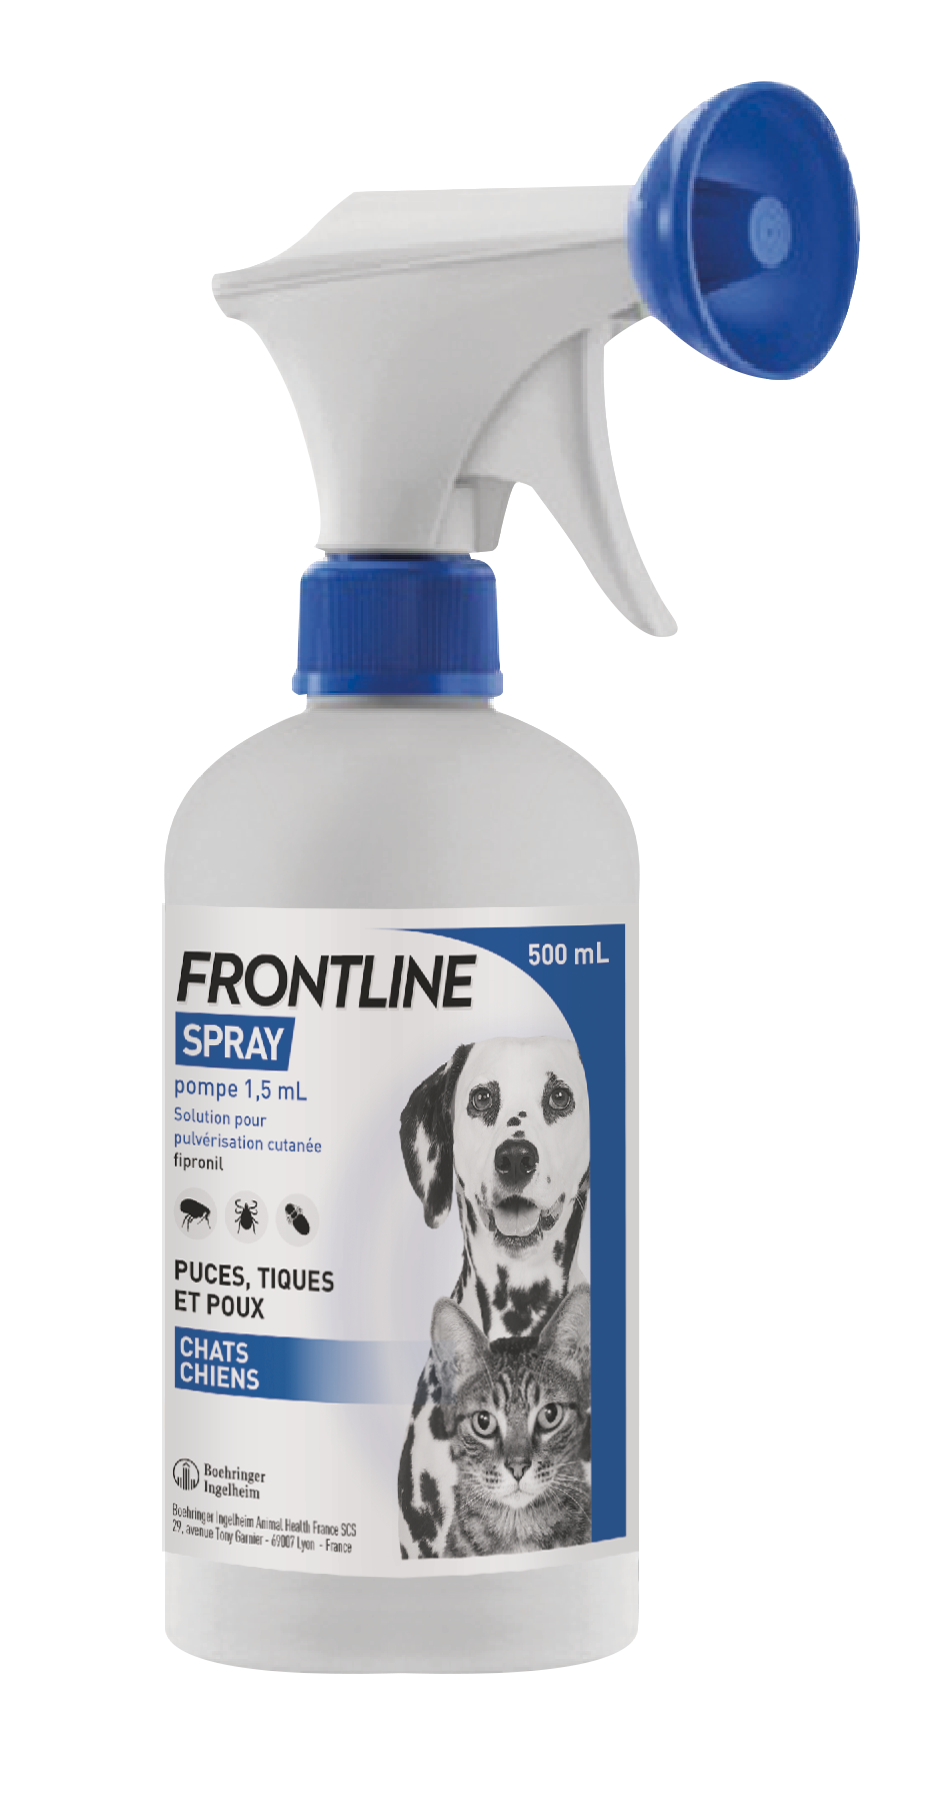 Frontline spray 500ml